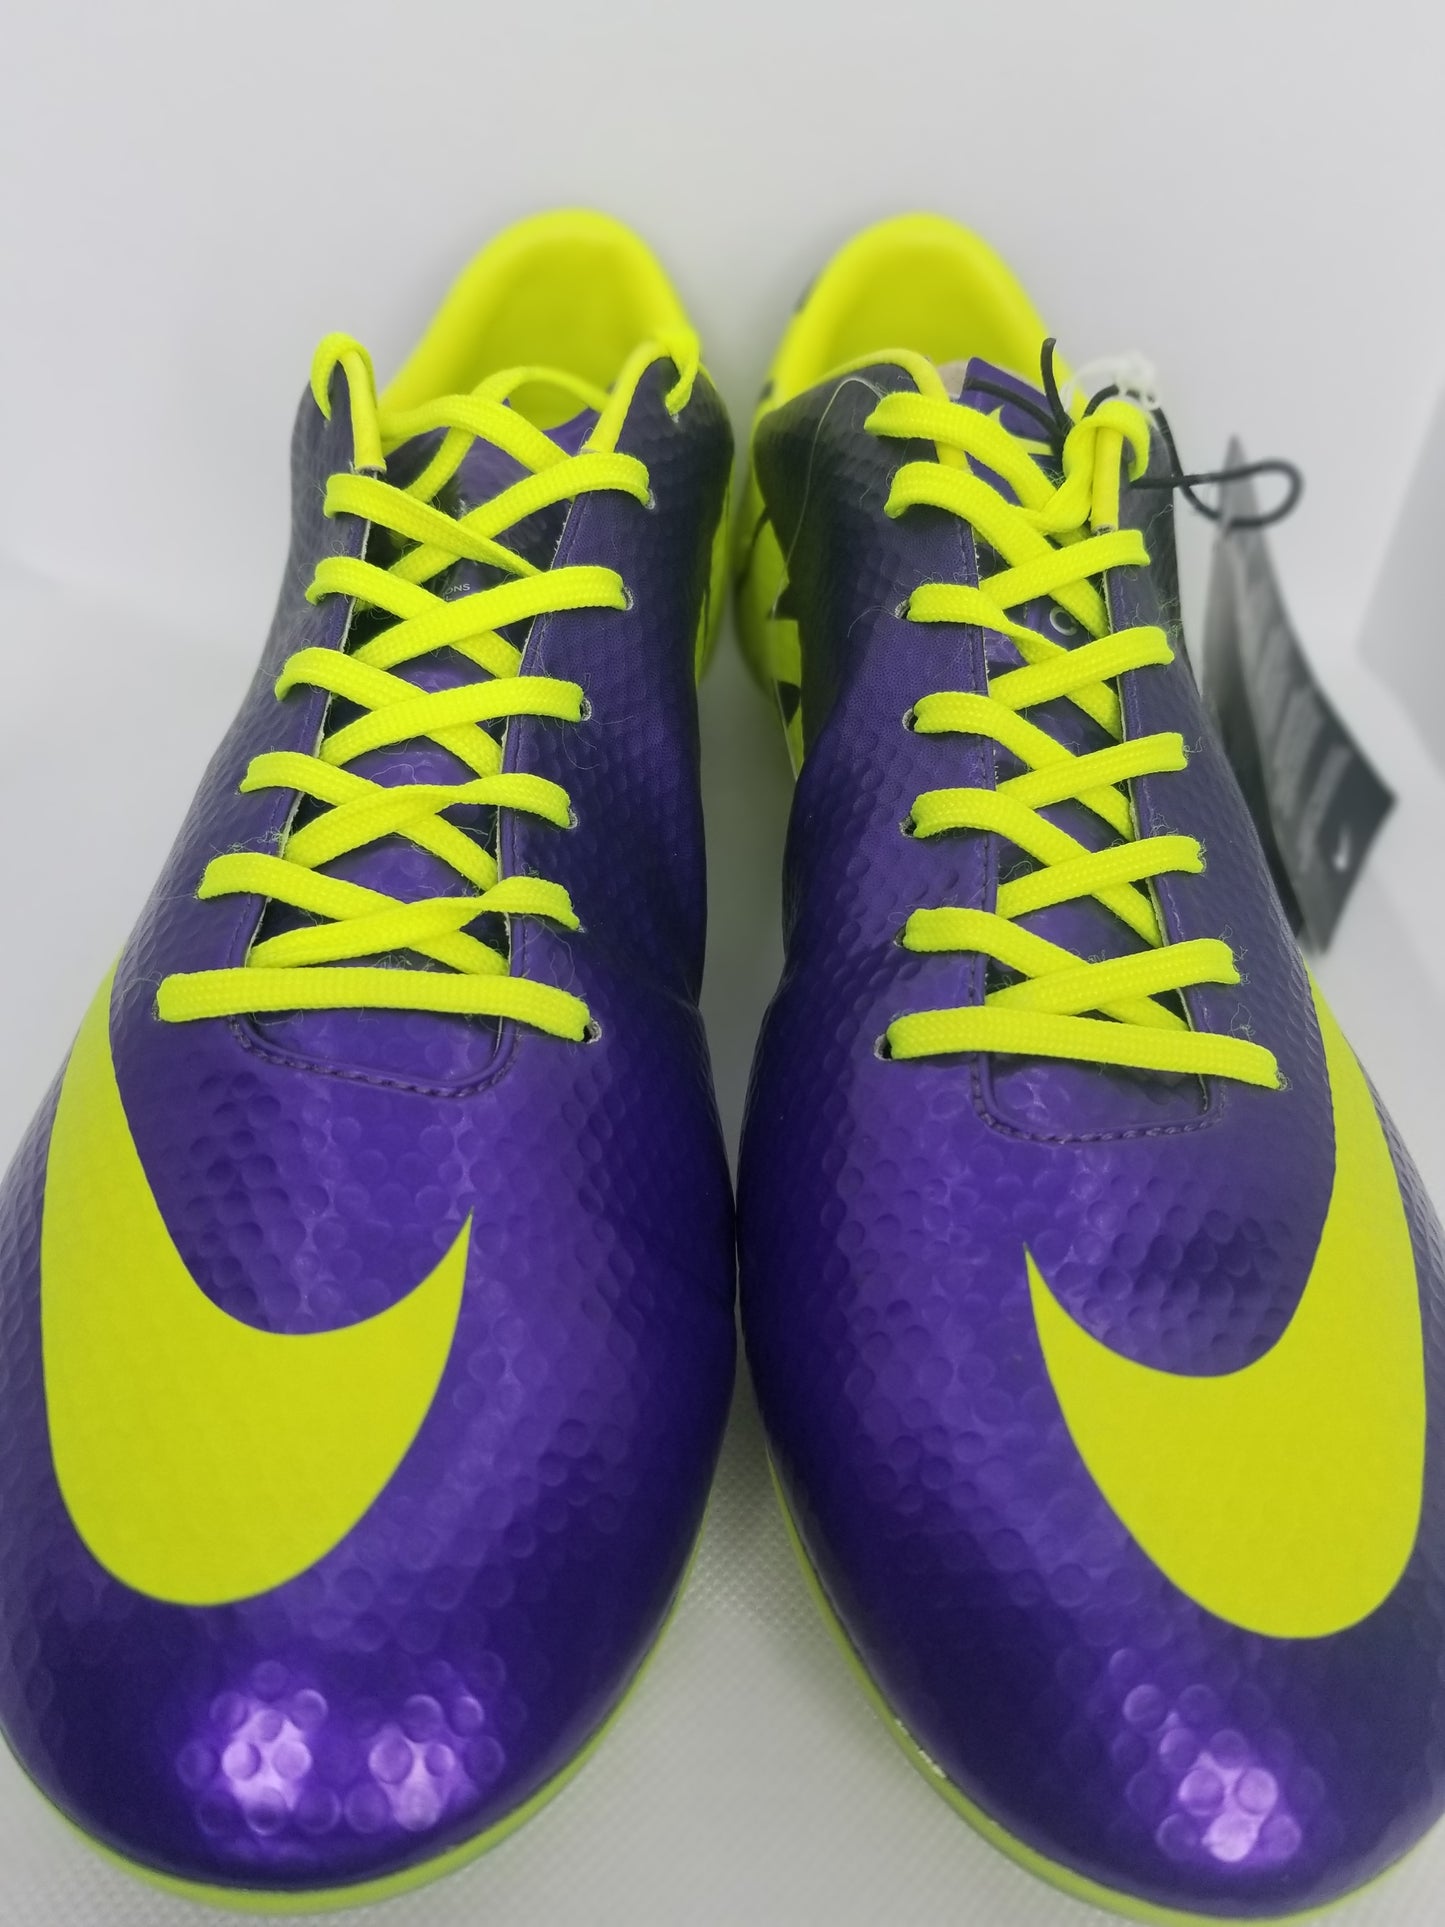 Nike Mercurial Vapor IX – Boots